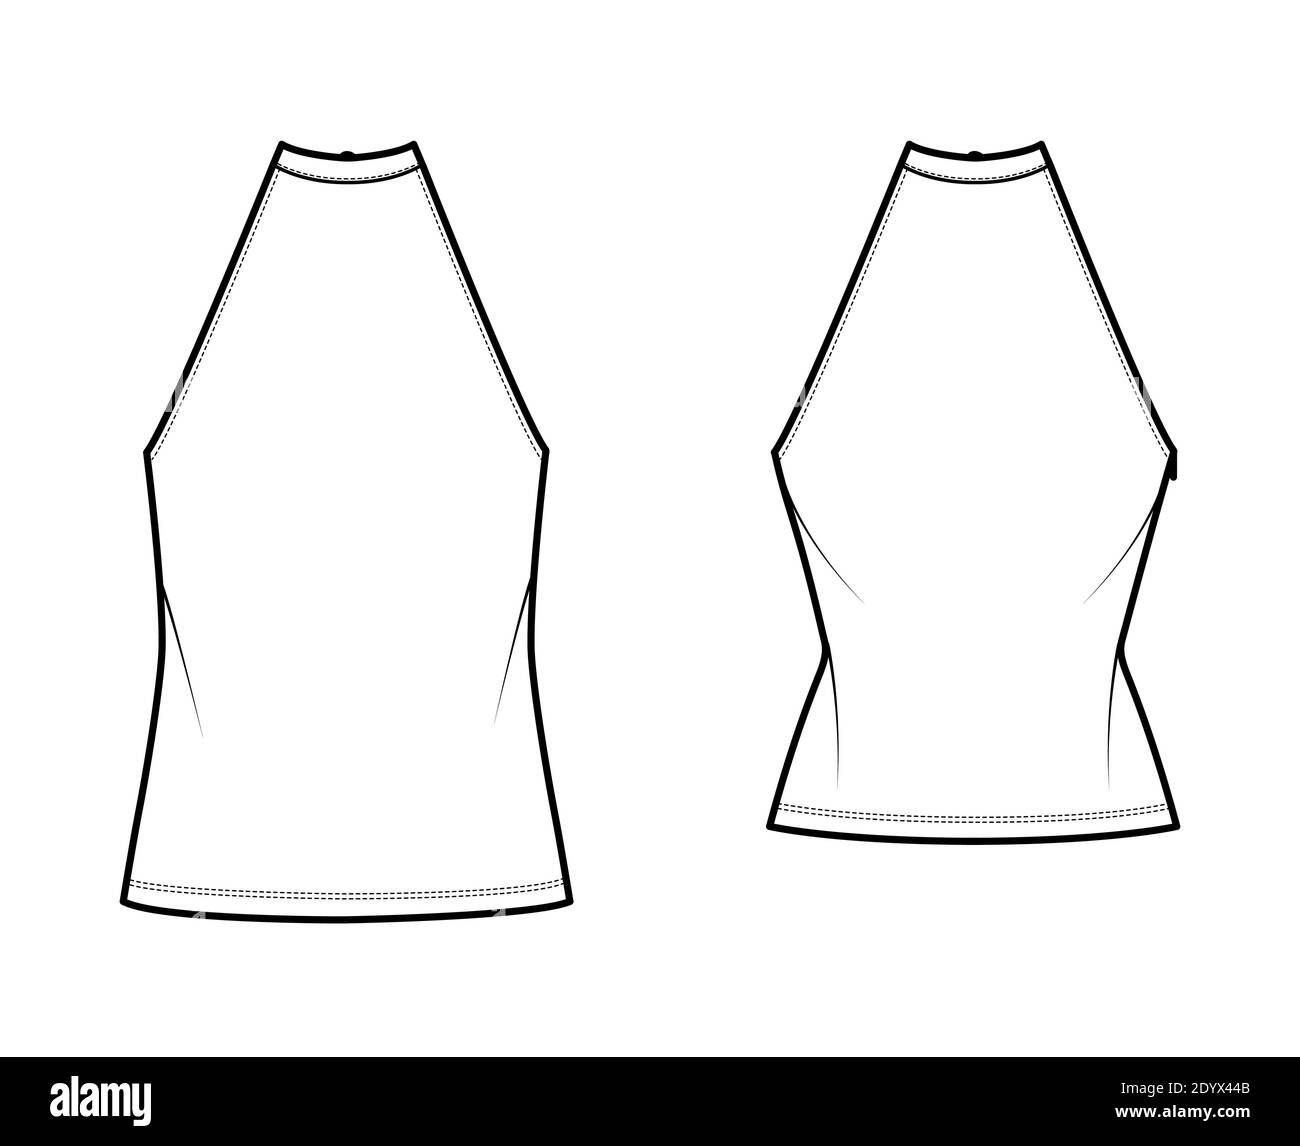 Empire waist shirt Stock Vector Images - Alamy